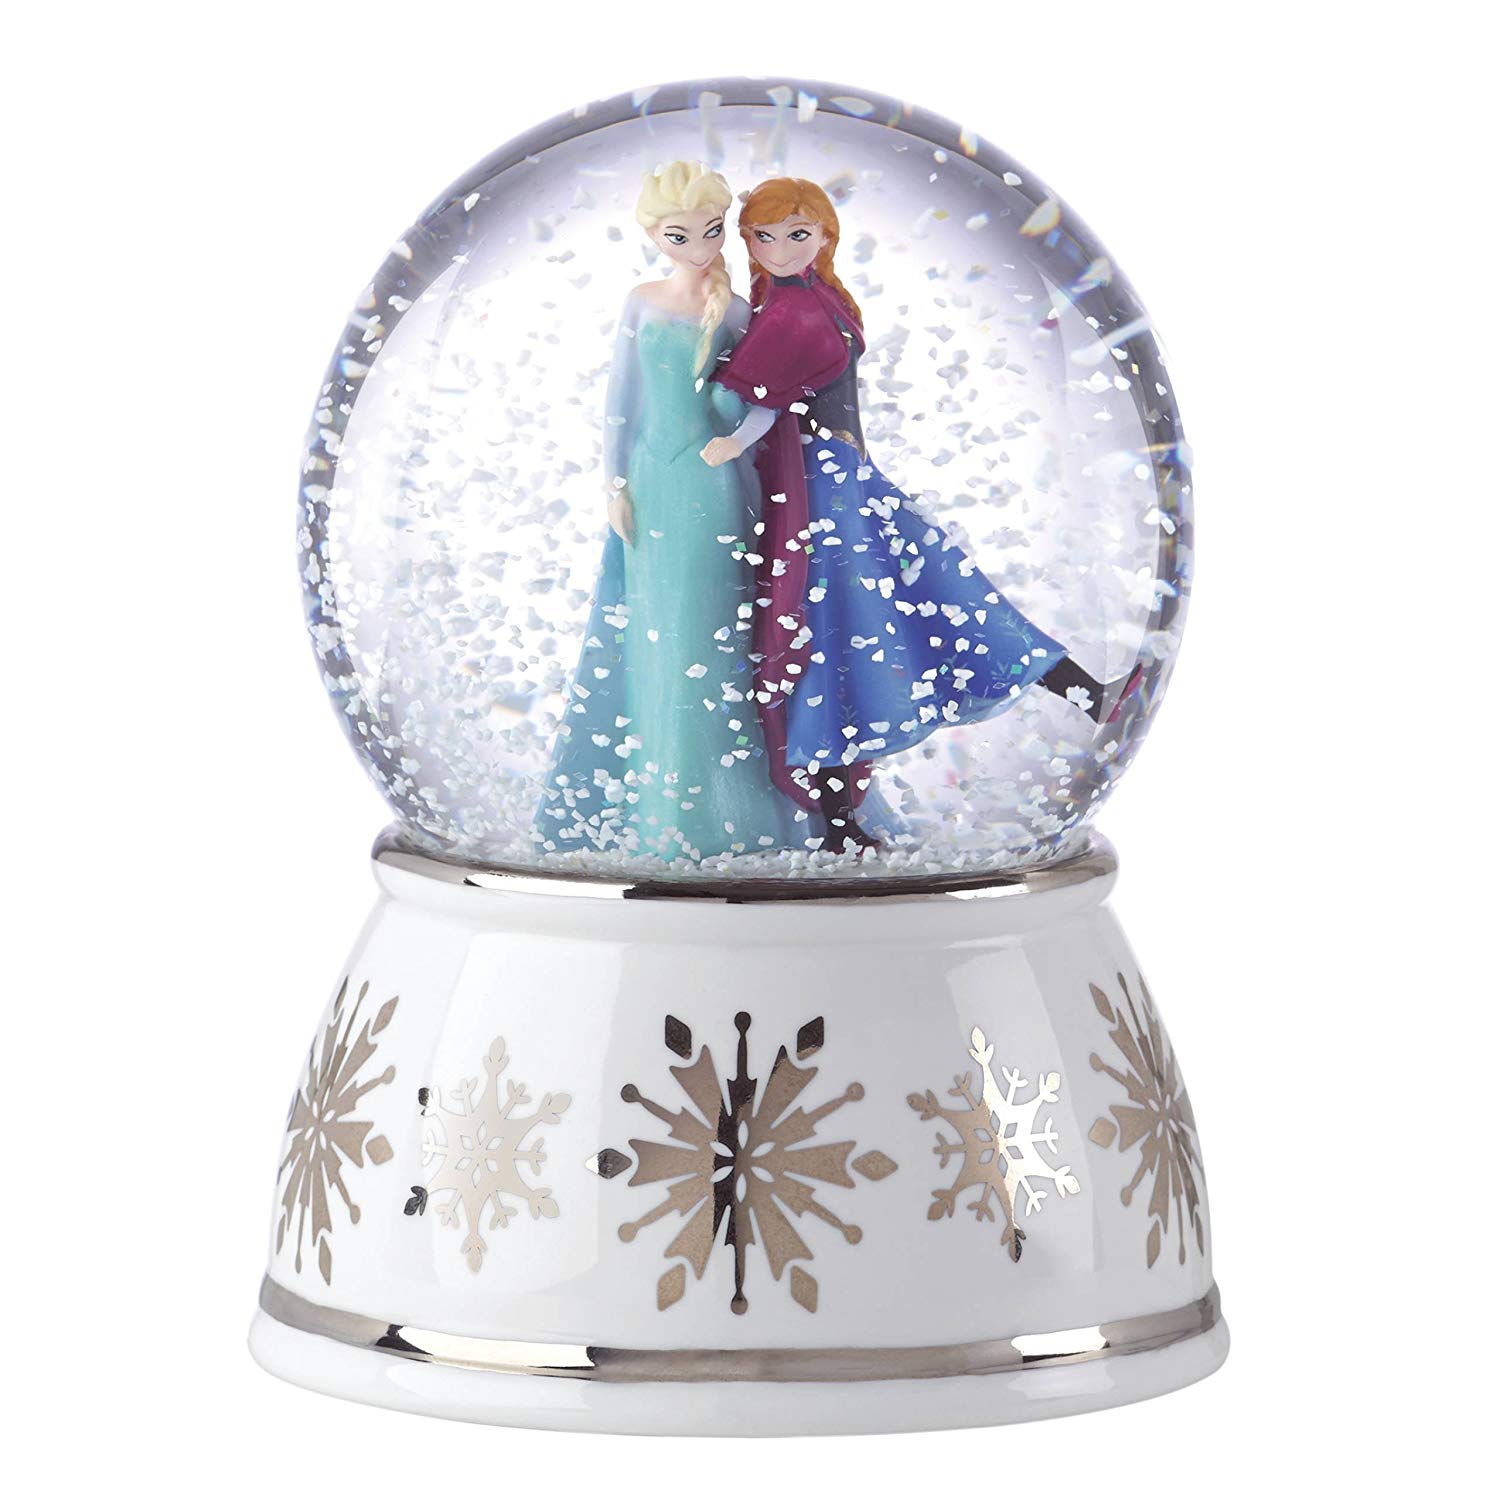 13 Disney Snow Globes for 1 Lucky Christmas! Mickey Fix